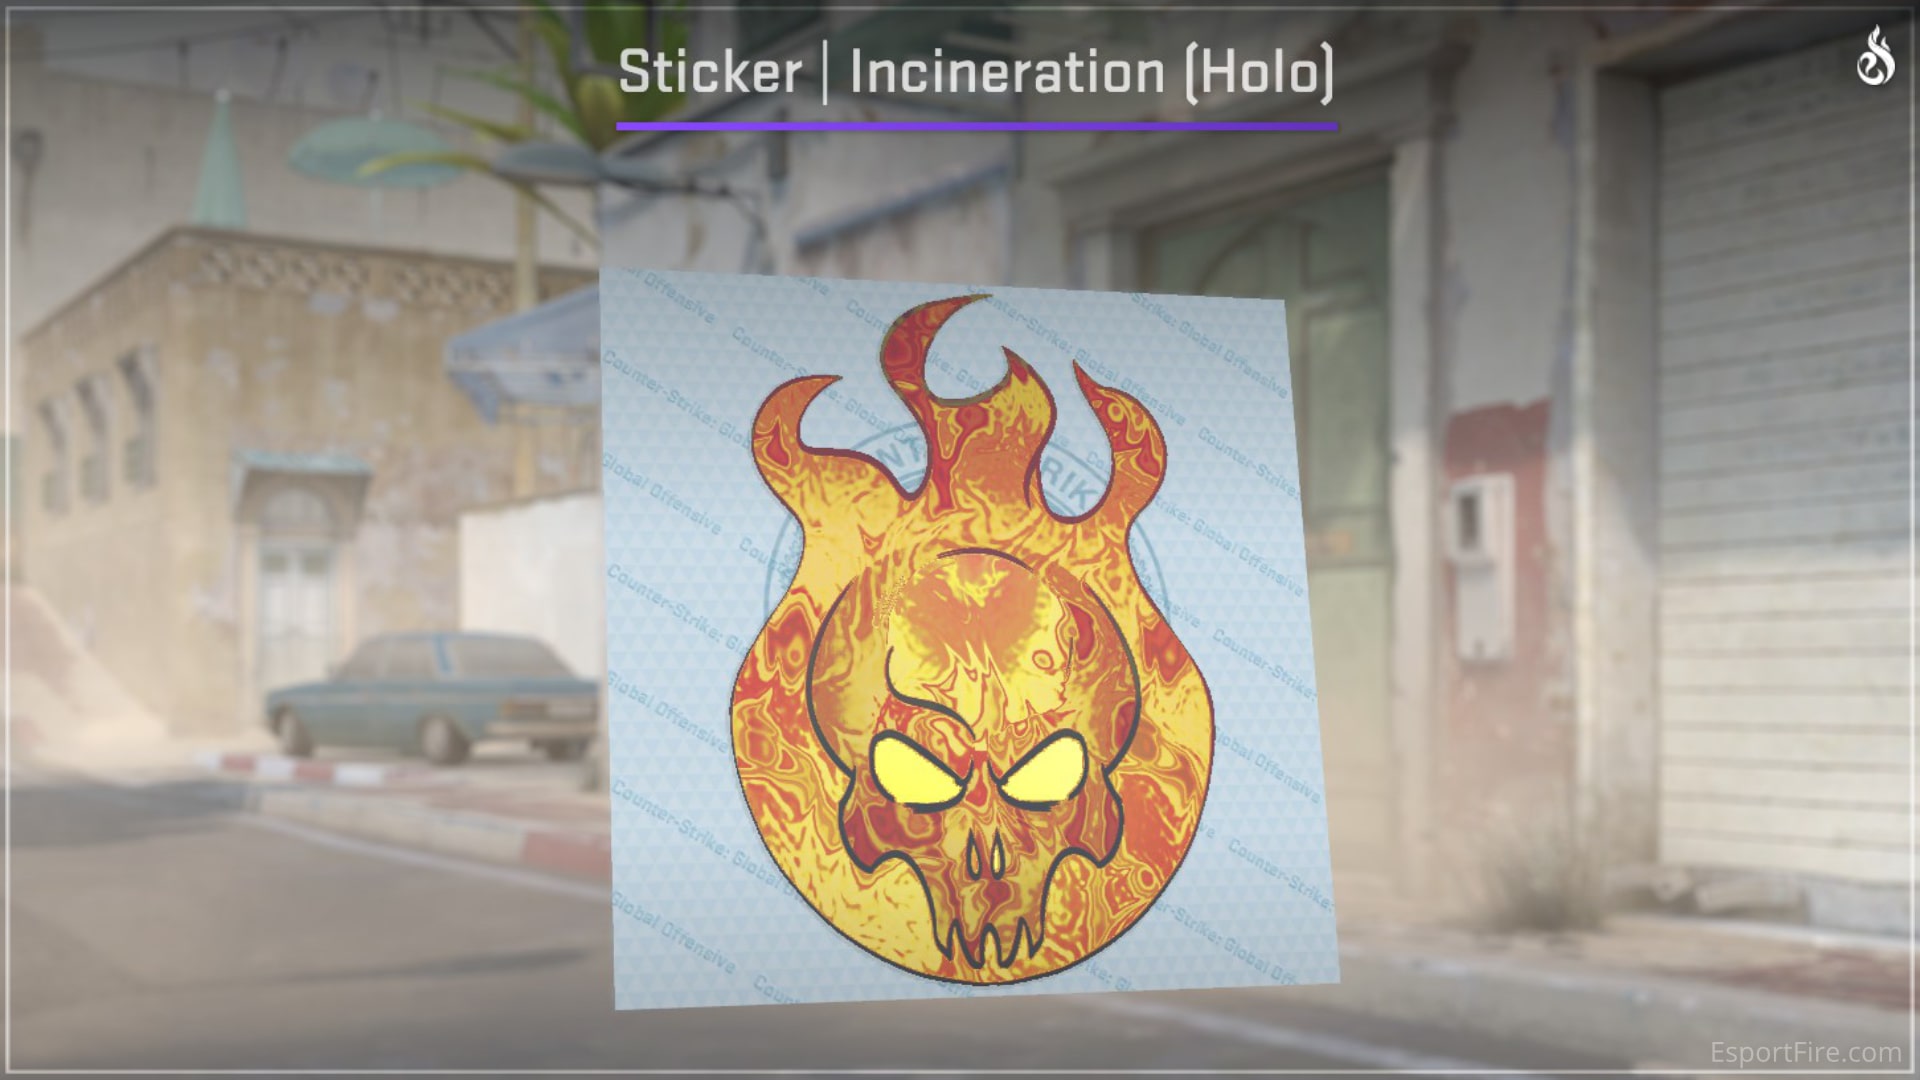 Incineration (Holo) - Best Orange Stickers for Crafts